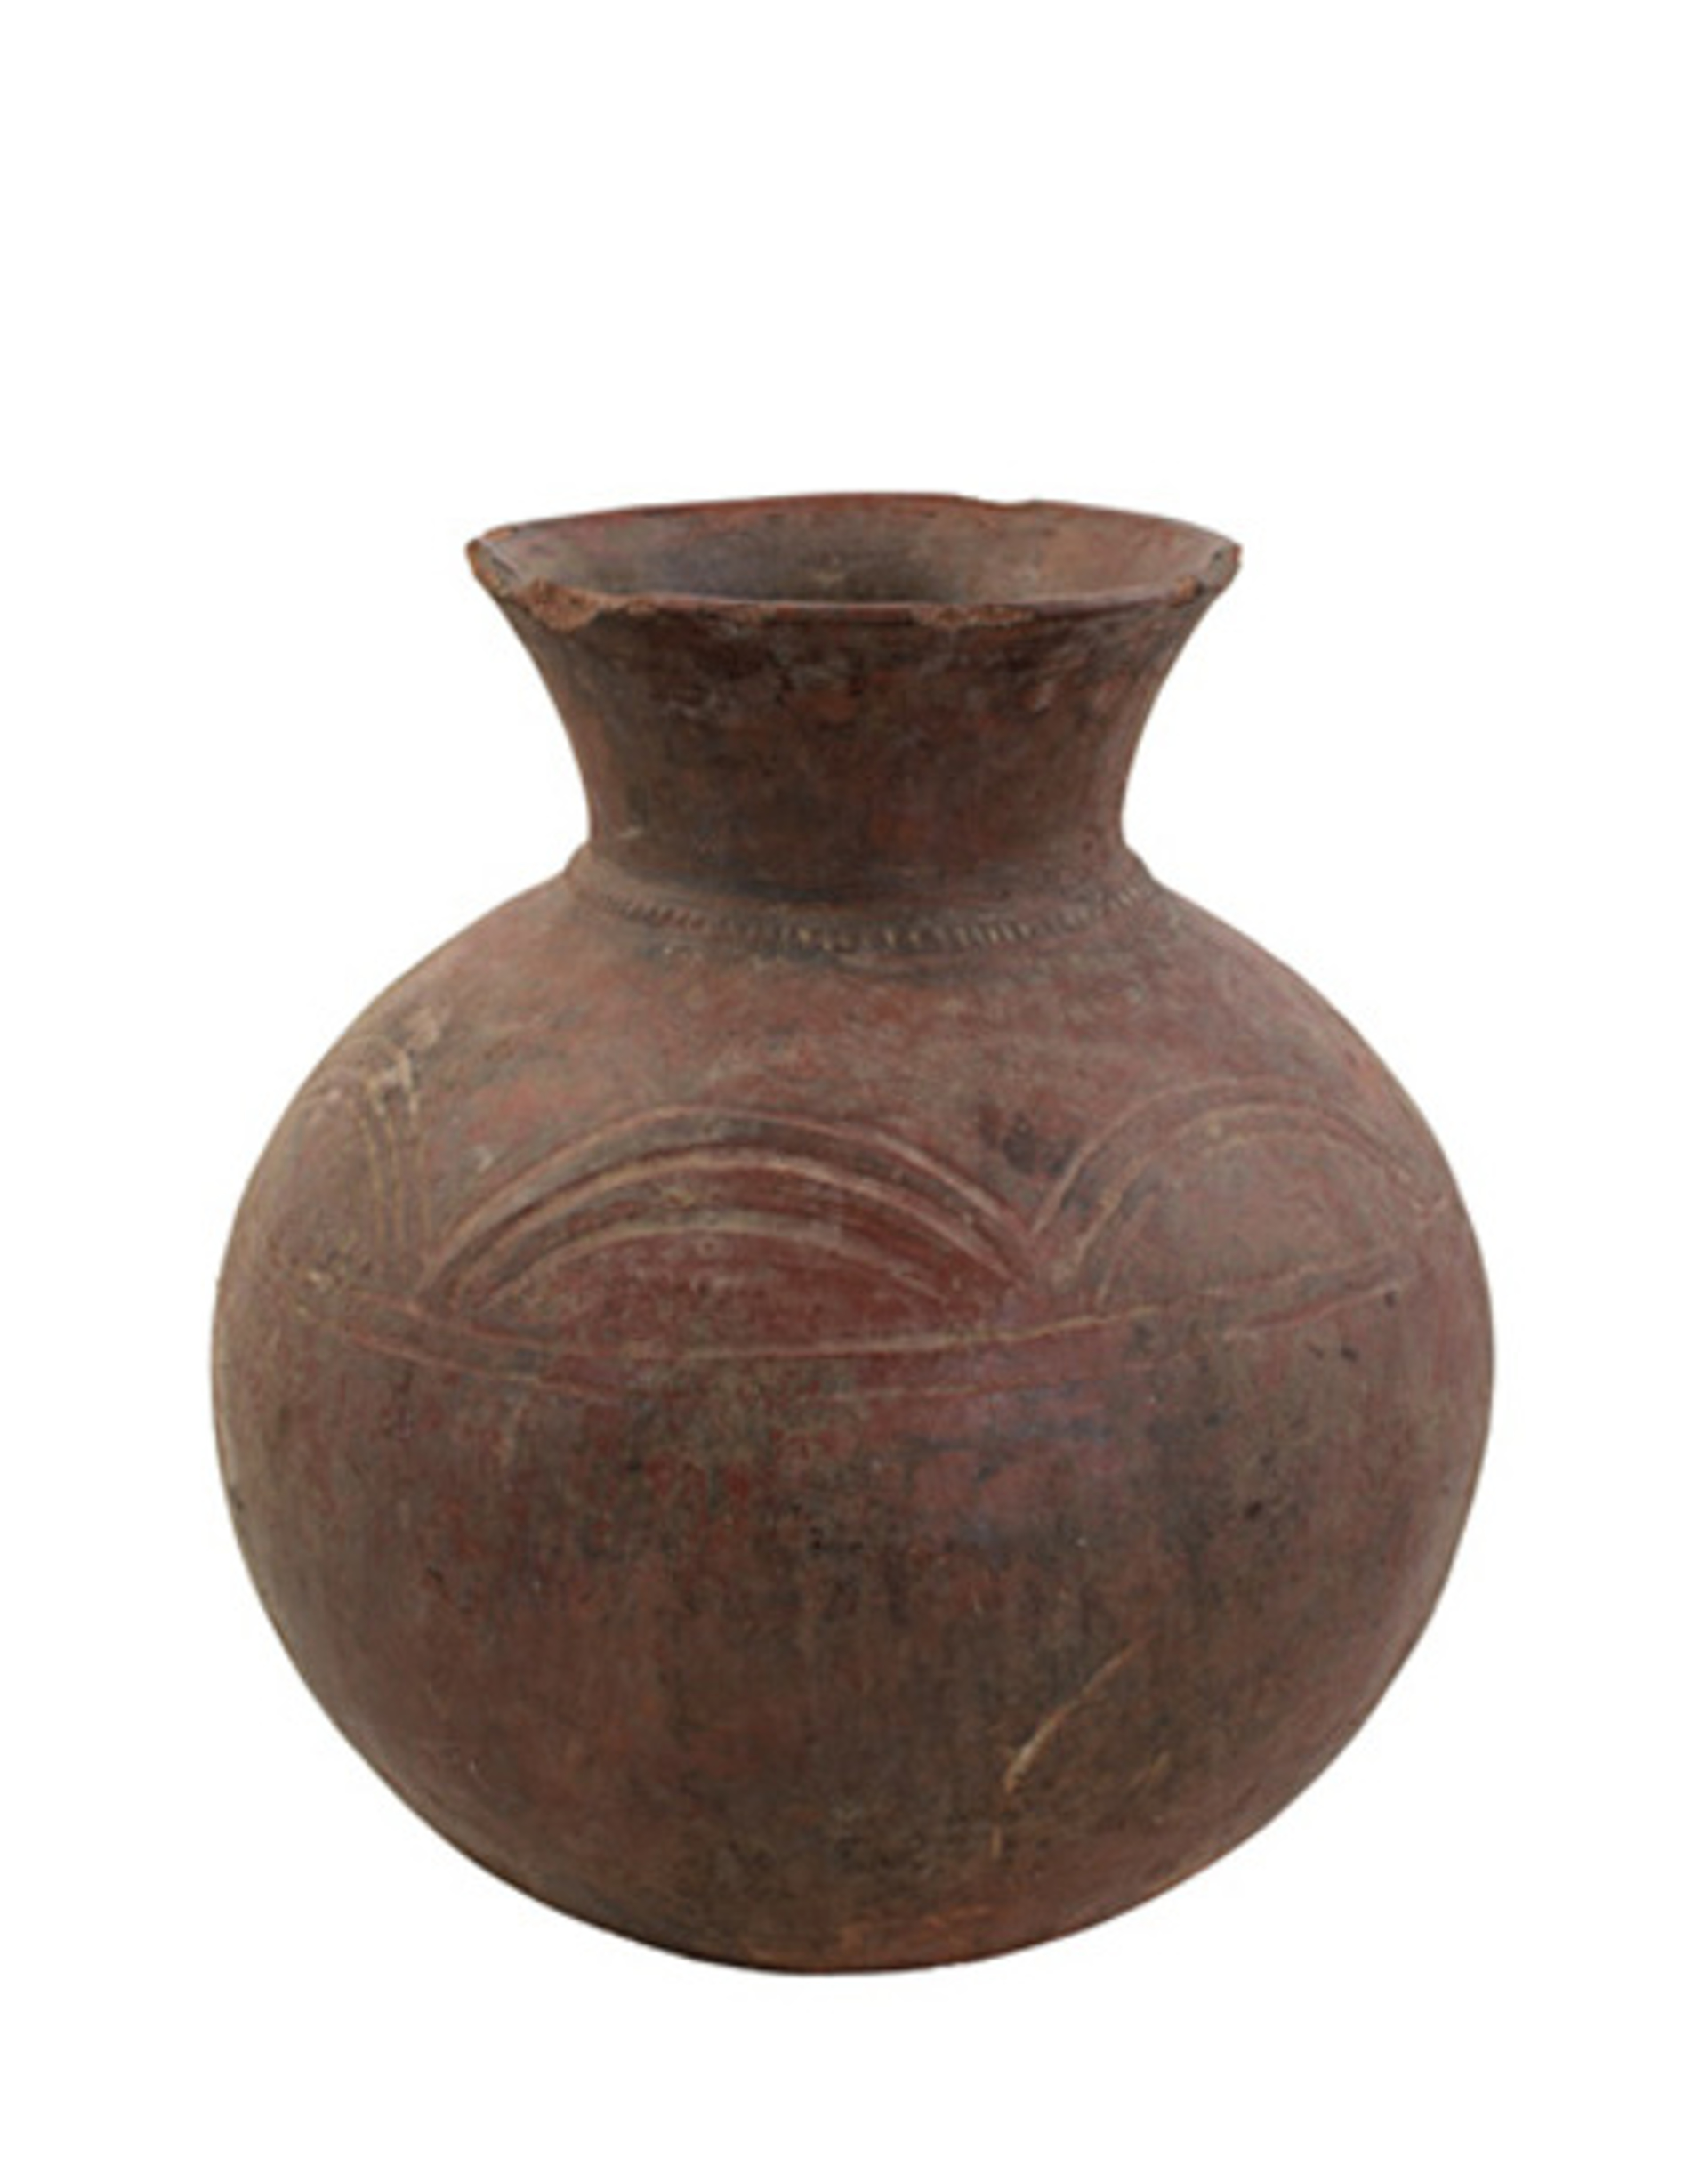 Ceramic Pot - Mossi, Burkina Fasso (Farmer's Water Jug) by African